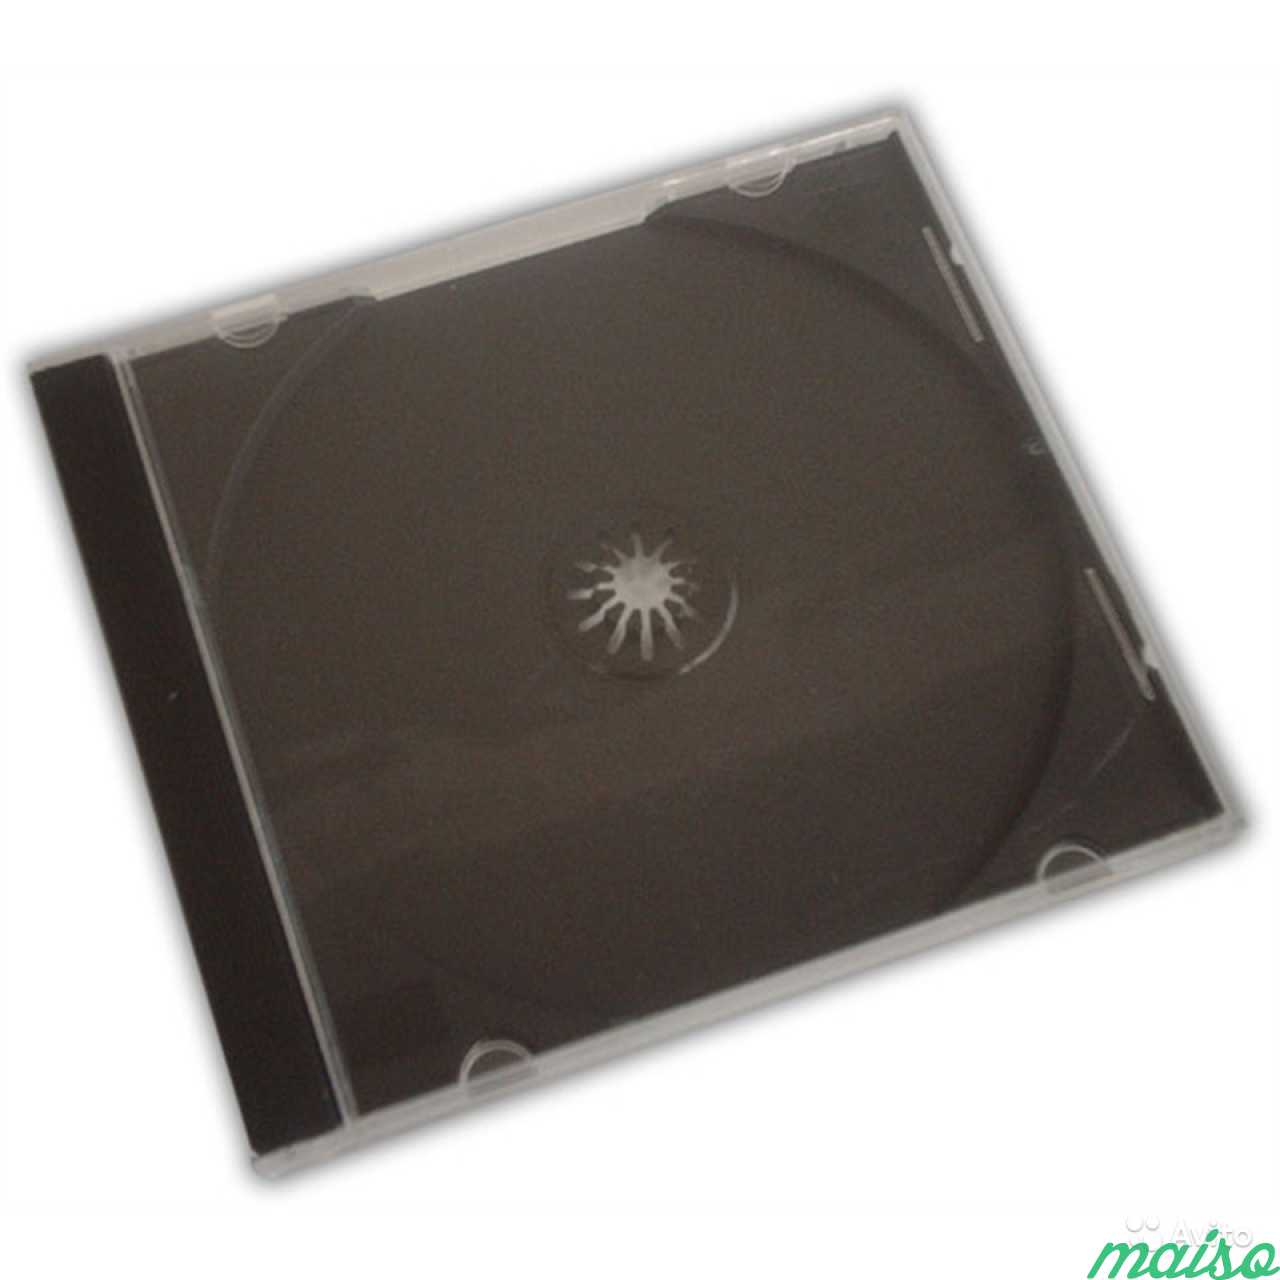 Коробки сд. Коробка DVD Slim 1 диск / бокс DVD 1 диск чёрный, 9мм, упаковка 150 штук. CD диск в упаковке. Коробка для CD. Диск в коробочке.